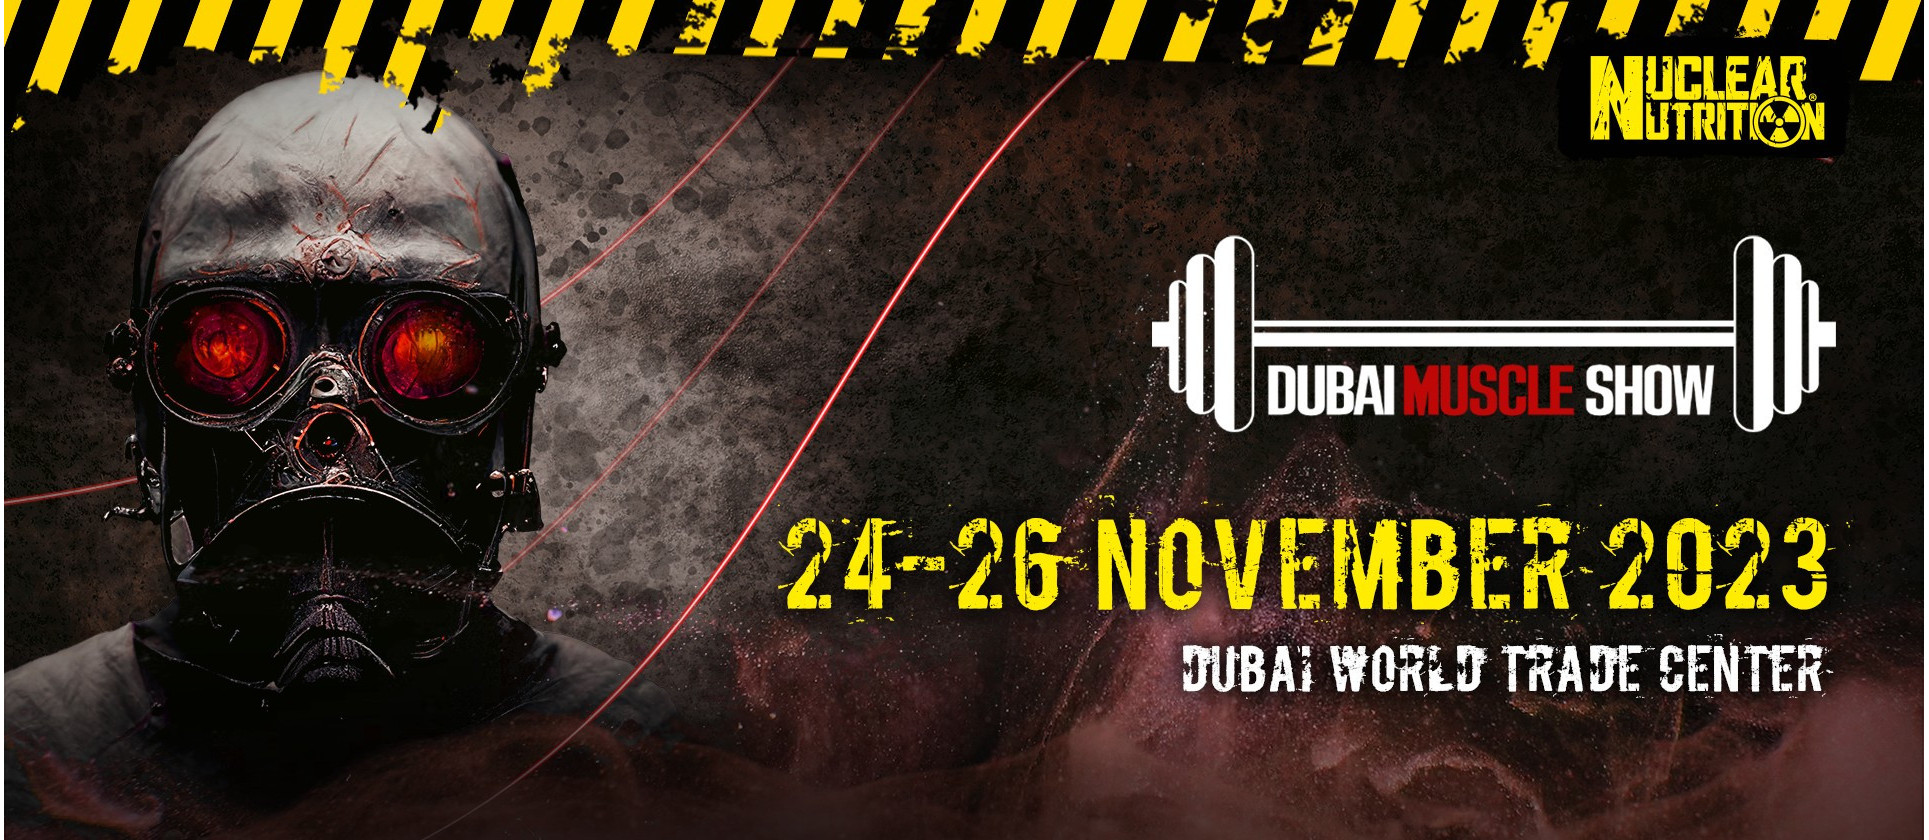 Dubai Muscle Show 2023 coming soon!